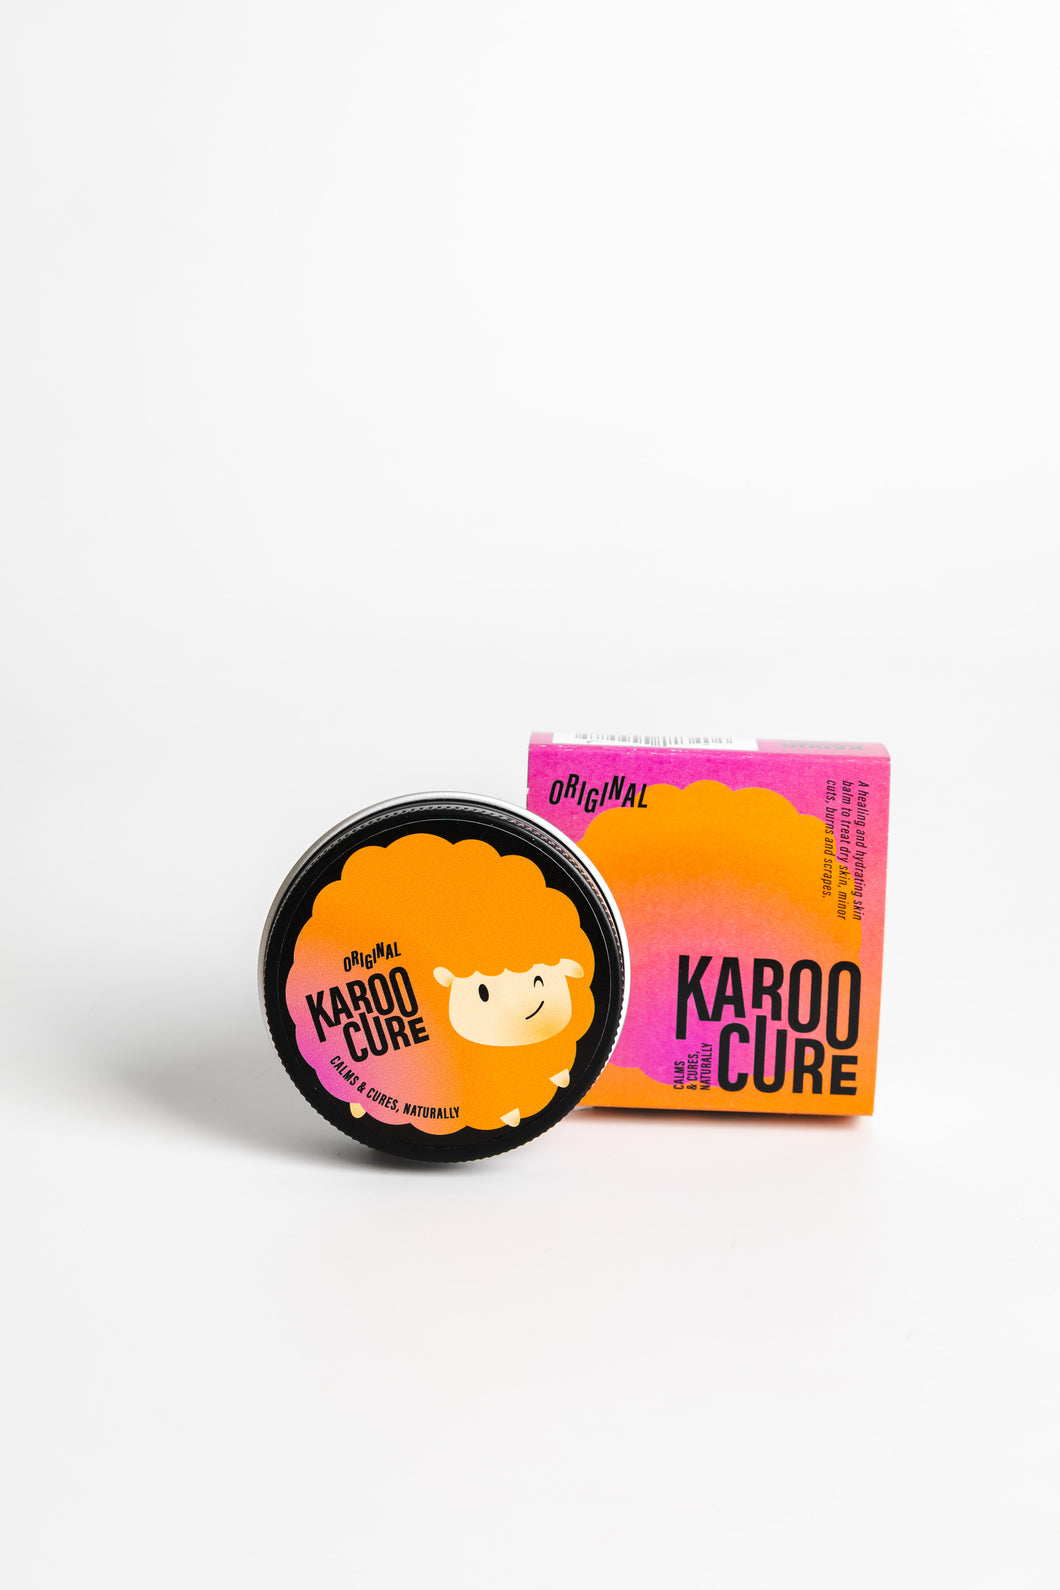 Karoo Cure Original